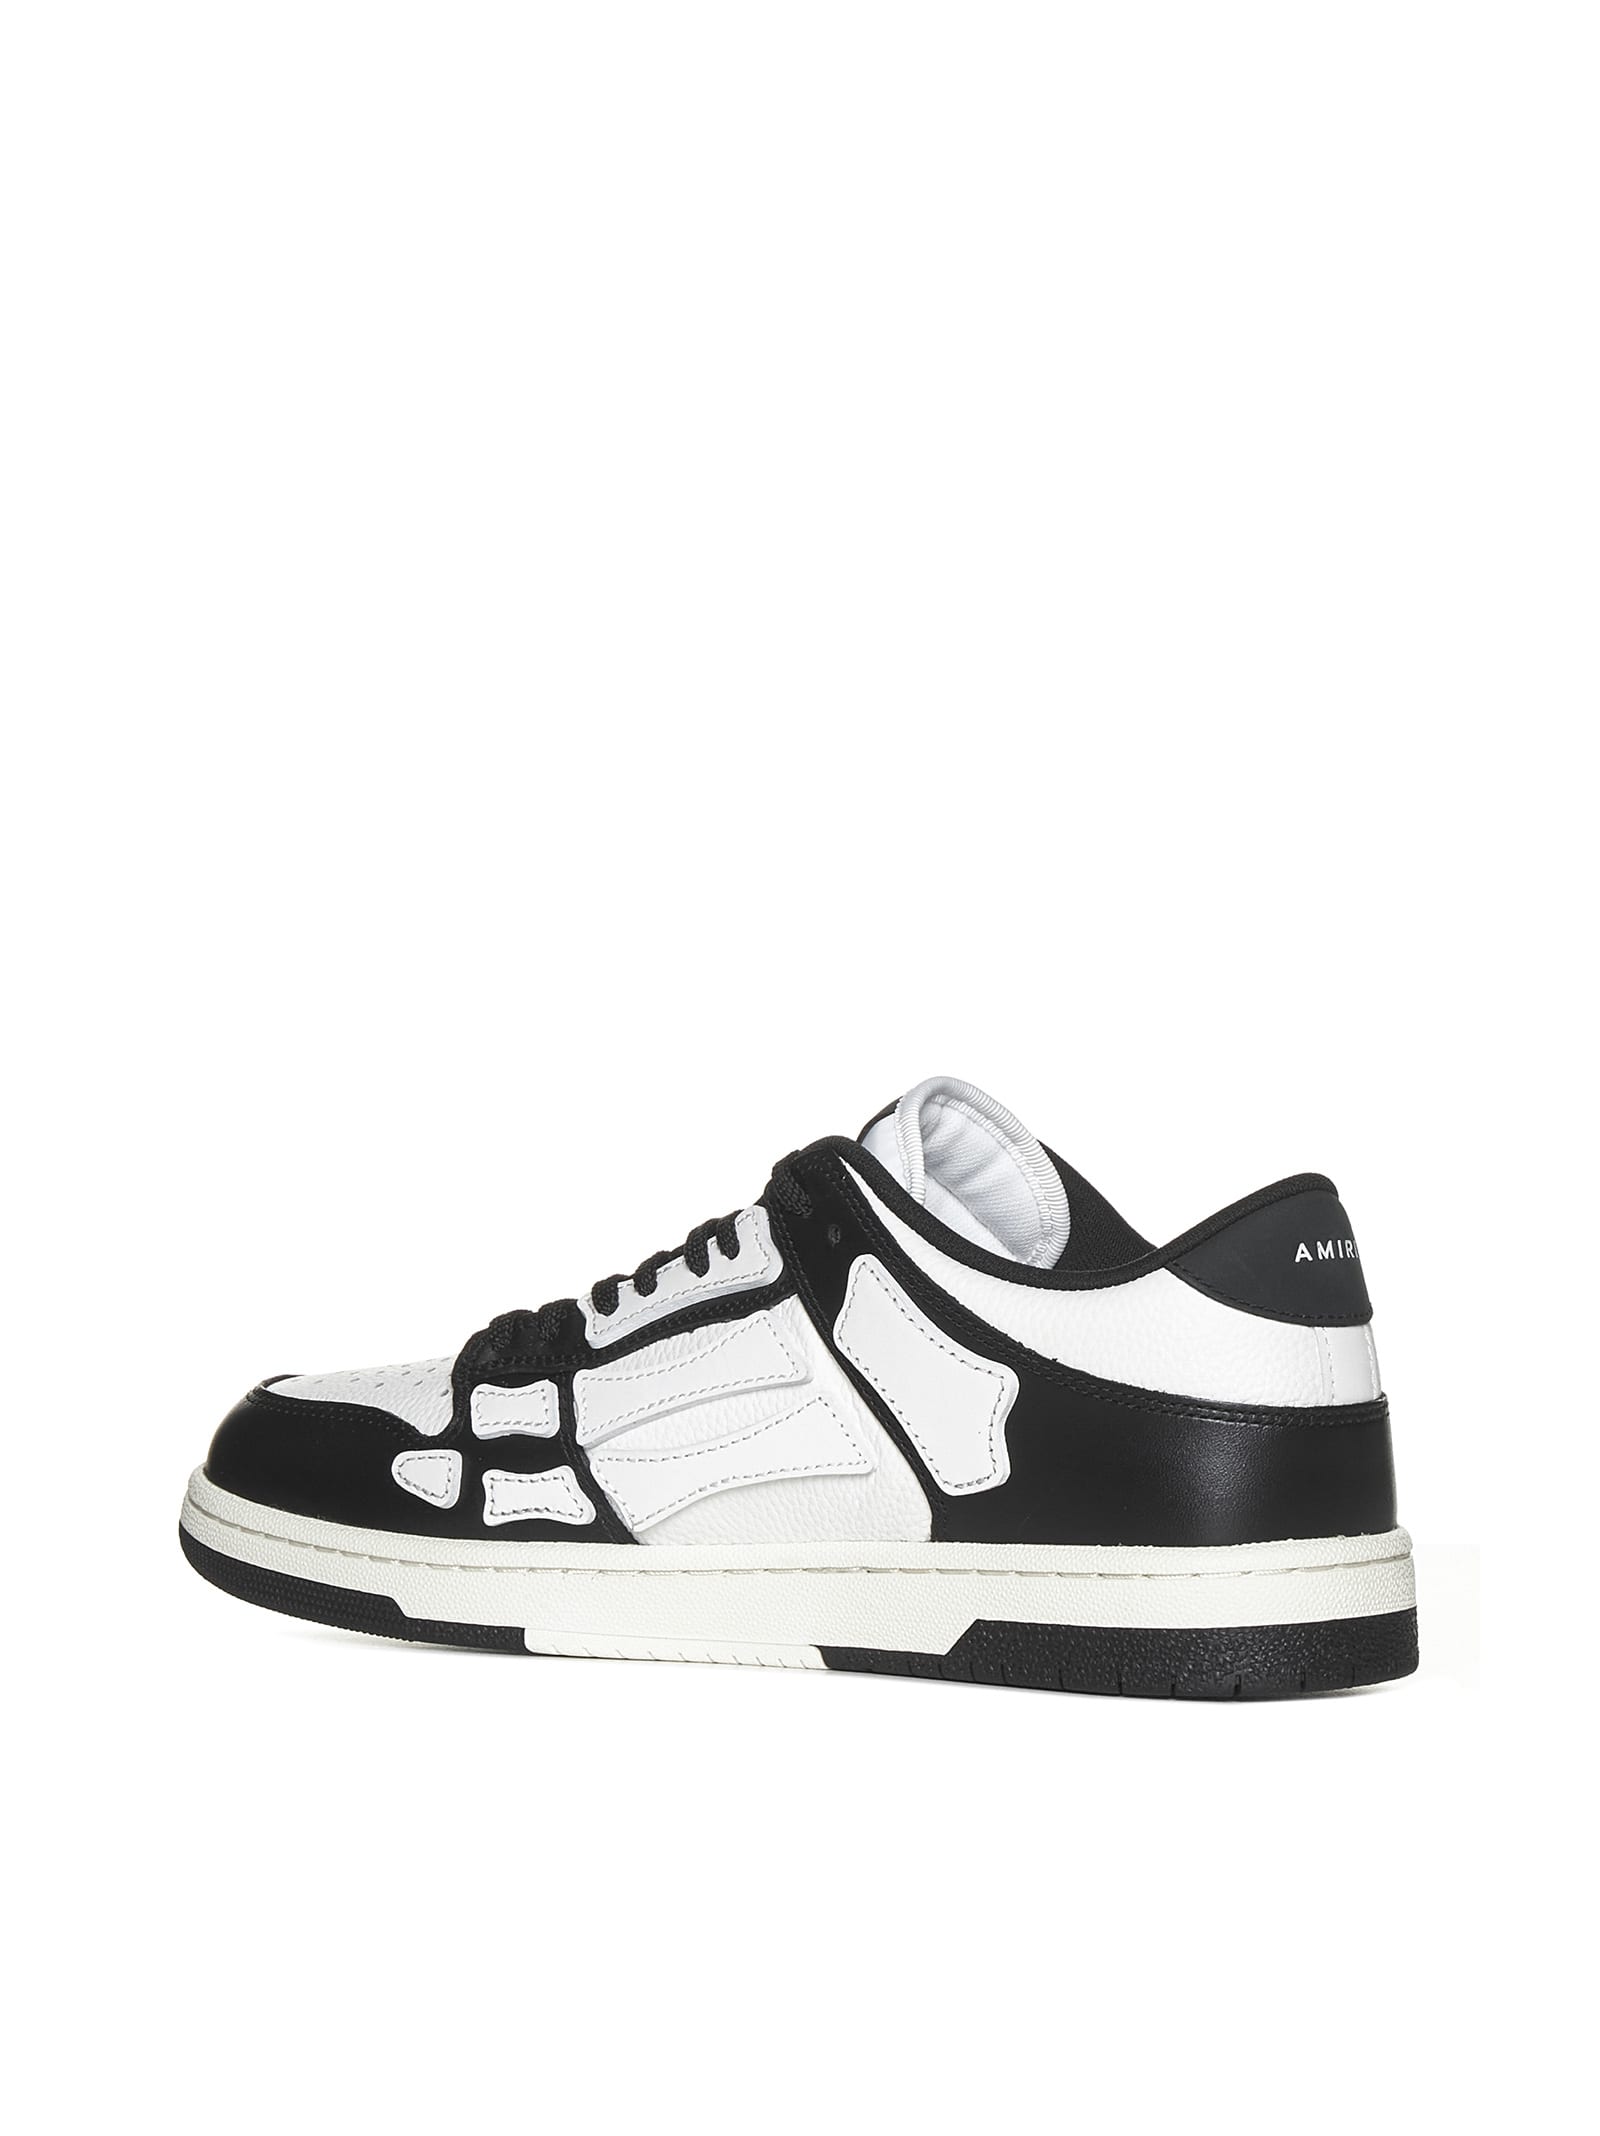 Shop Amiri Sneakers In Black/white